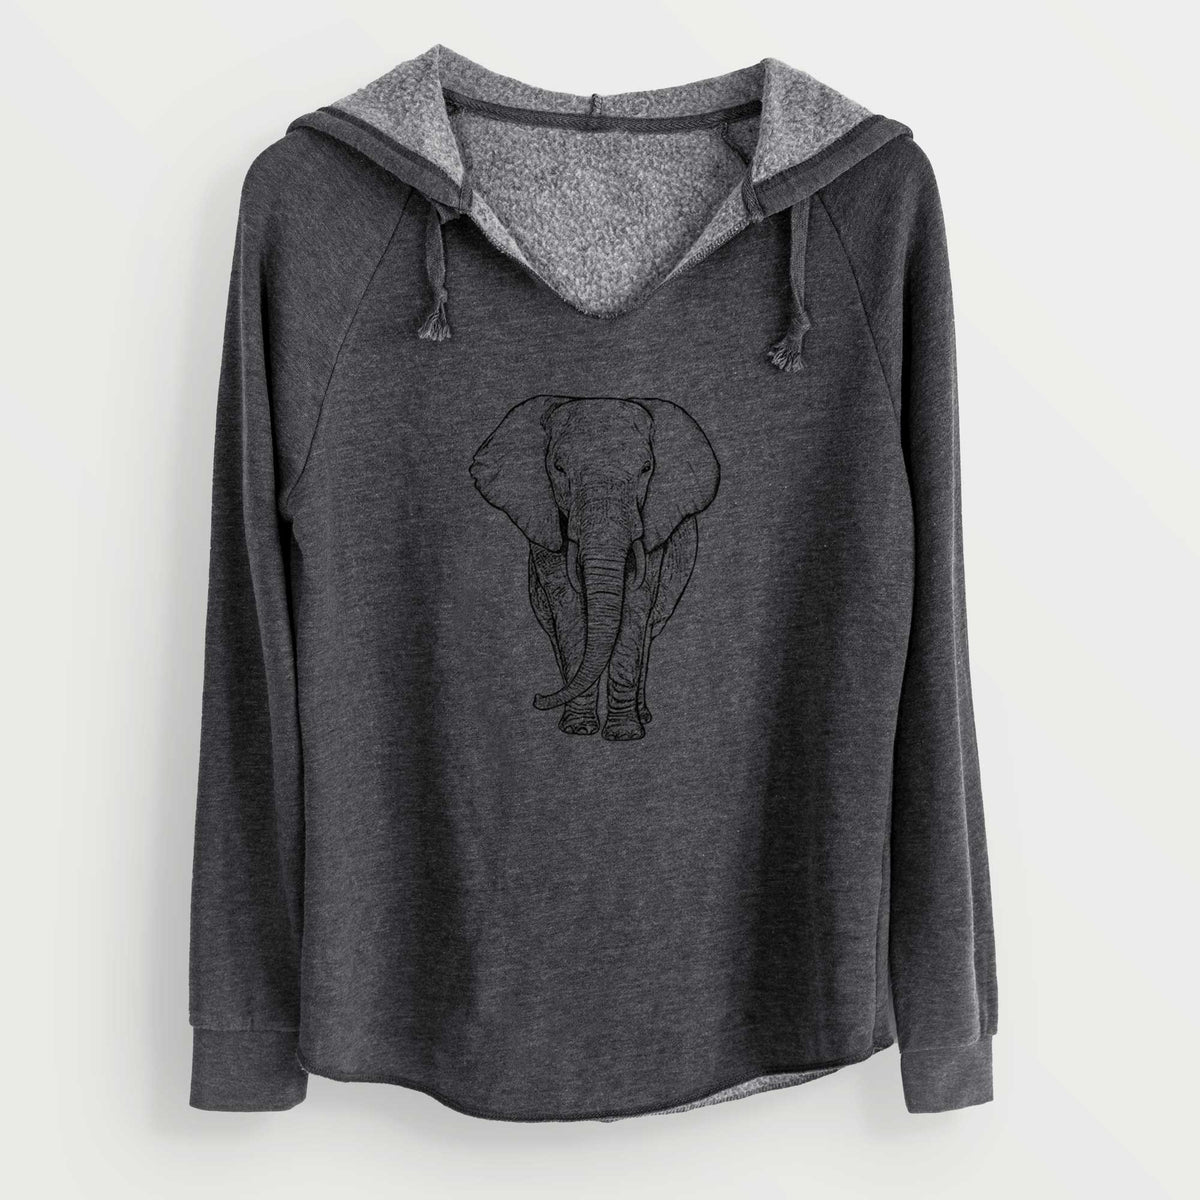 Loxodonta africana - African Elephant - Cali Wave Hooded Sweatshirt